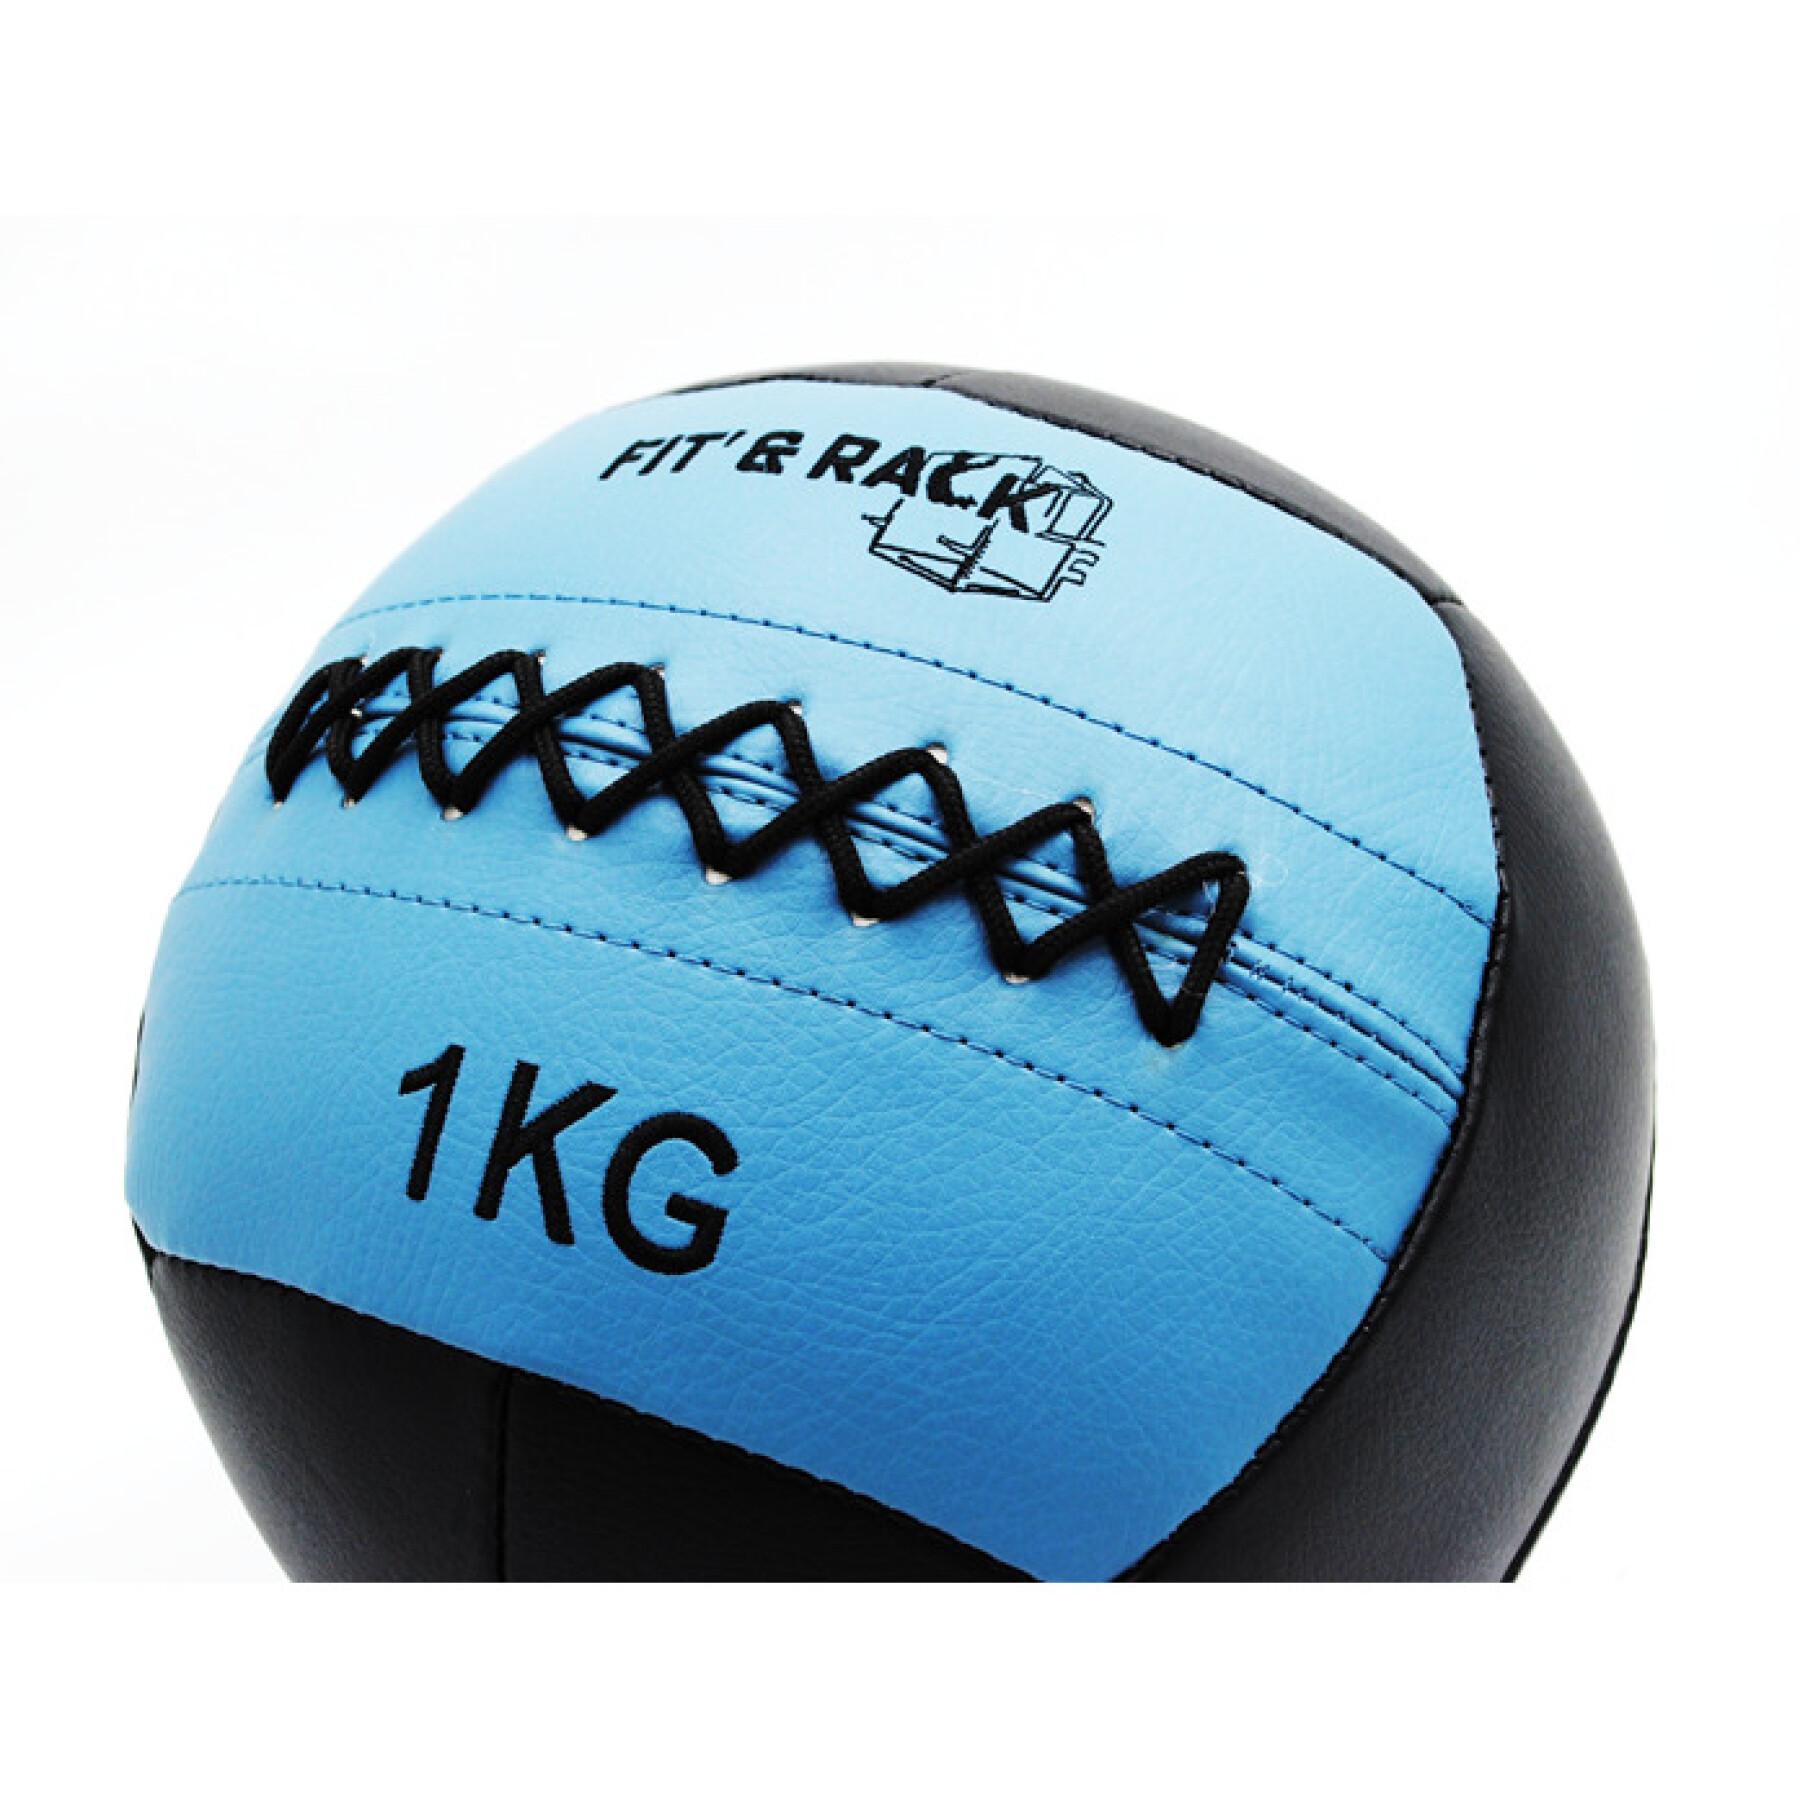 Wandball-Wettbewerb Fit & Rack 1 Kg